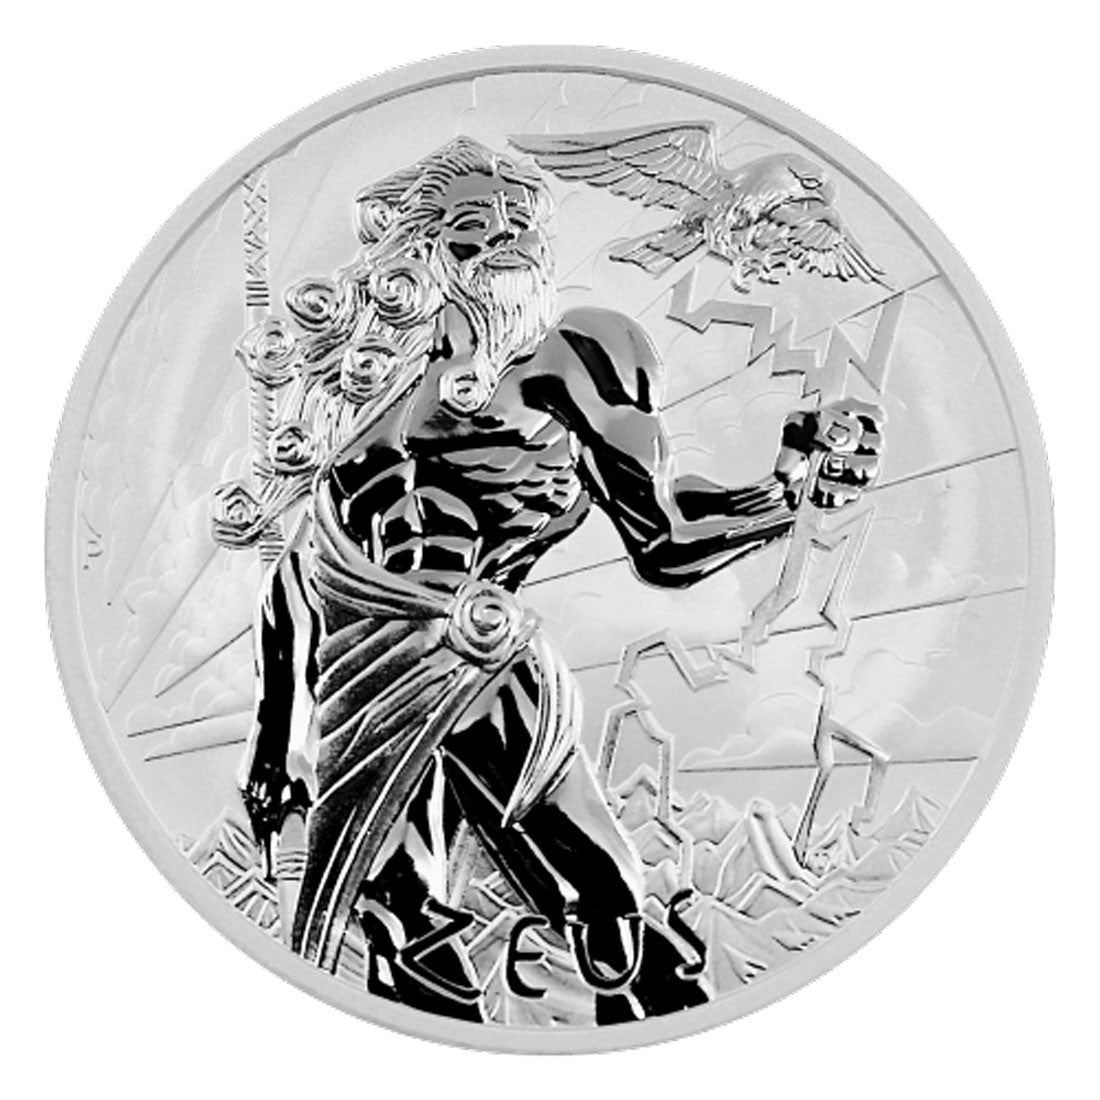 2020 1oz .999 Silver BU Coin - Gods of Olympus - Zeus